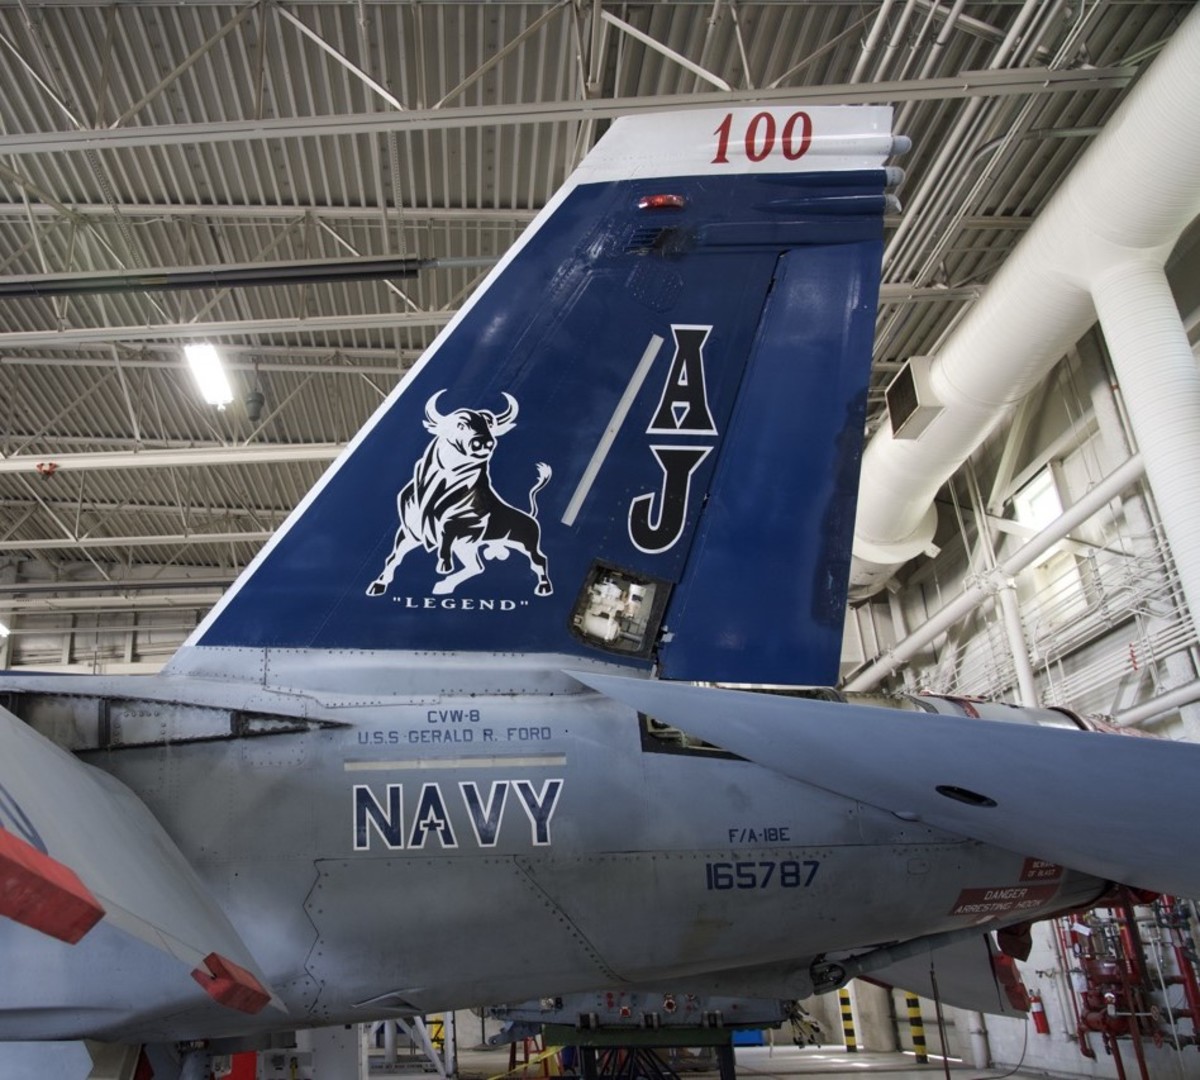 US Navy Legend Tail